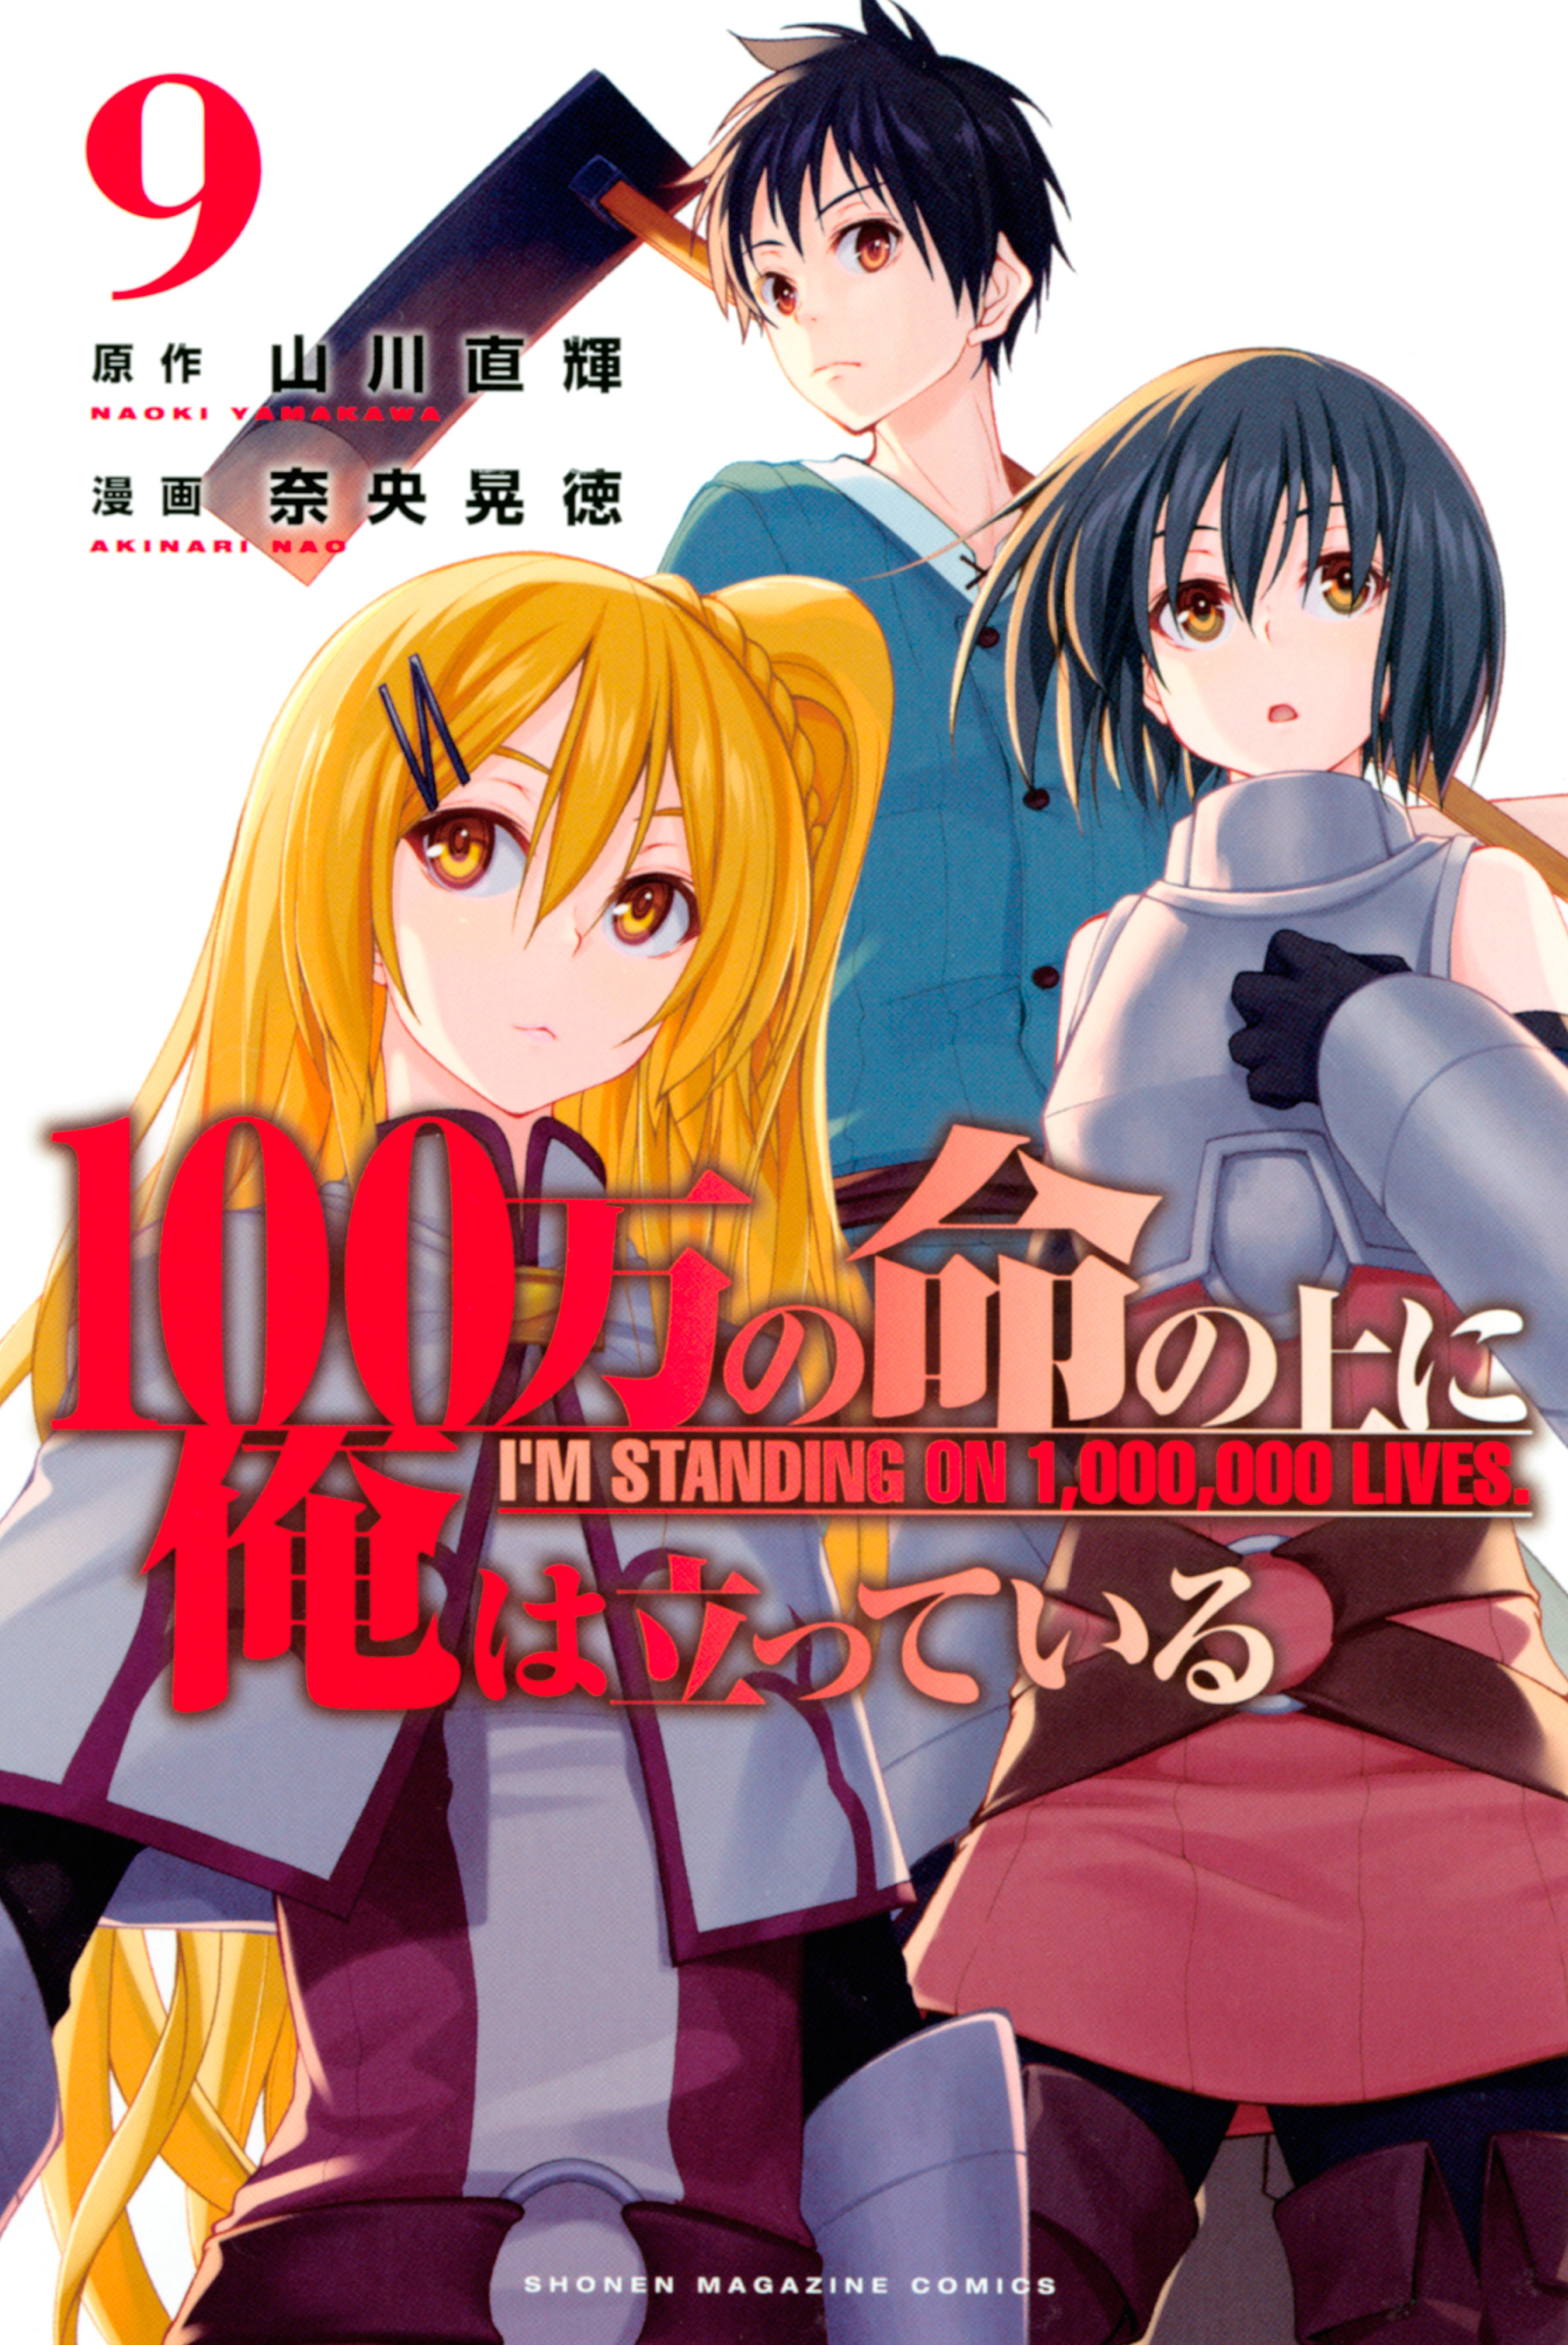 100-man no Inochi no Ue ni Ore wa Tatteiru (I'm standing on a million  lives) Studio: Maho Film. Source: Manga. Released: October 2, 2020.  Episode: 12., By Otaku Connection